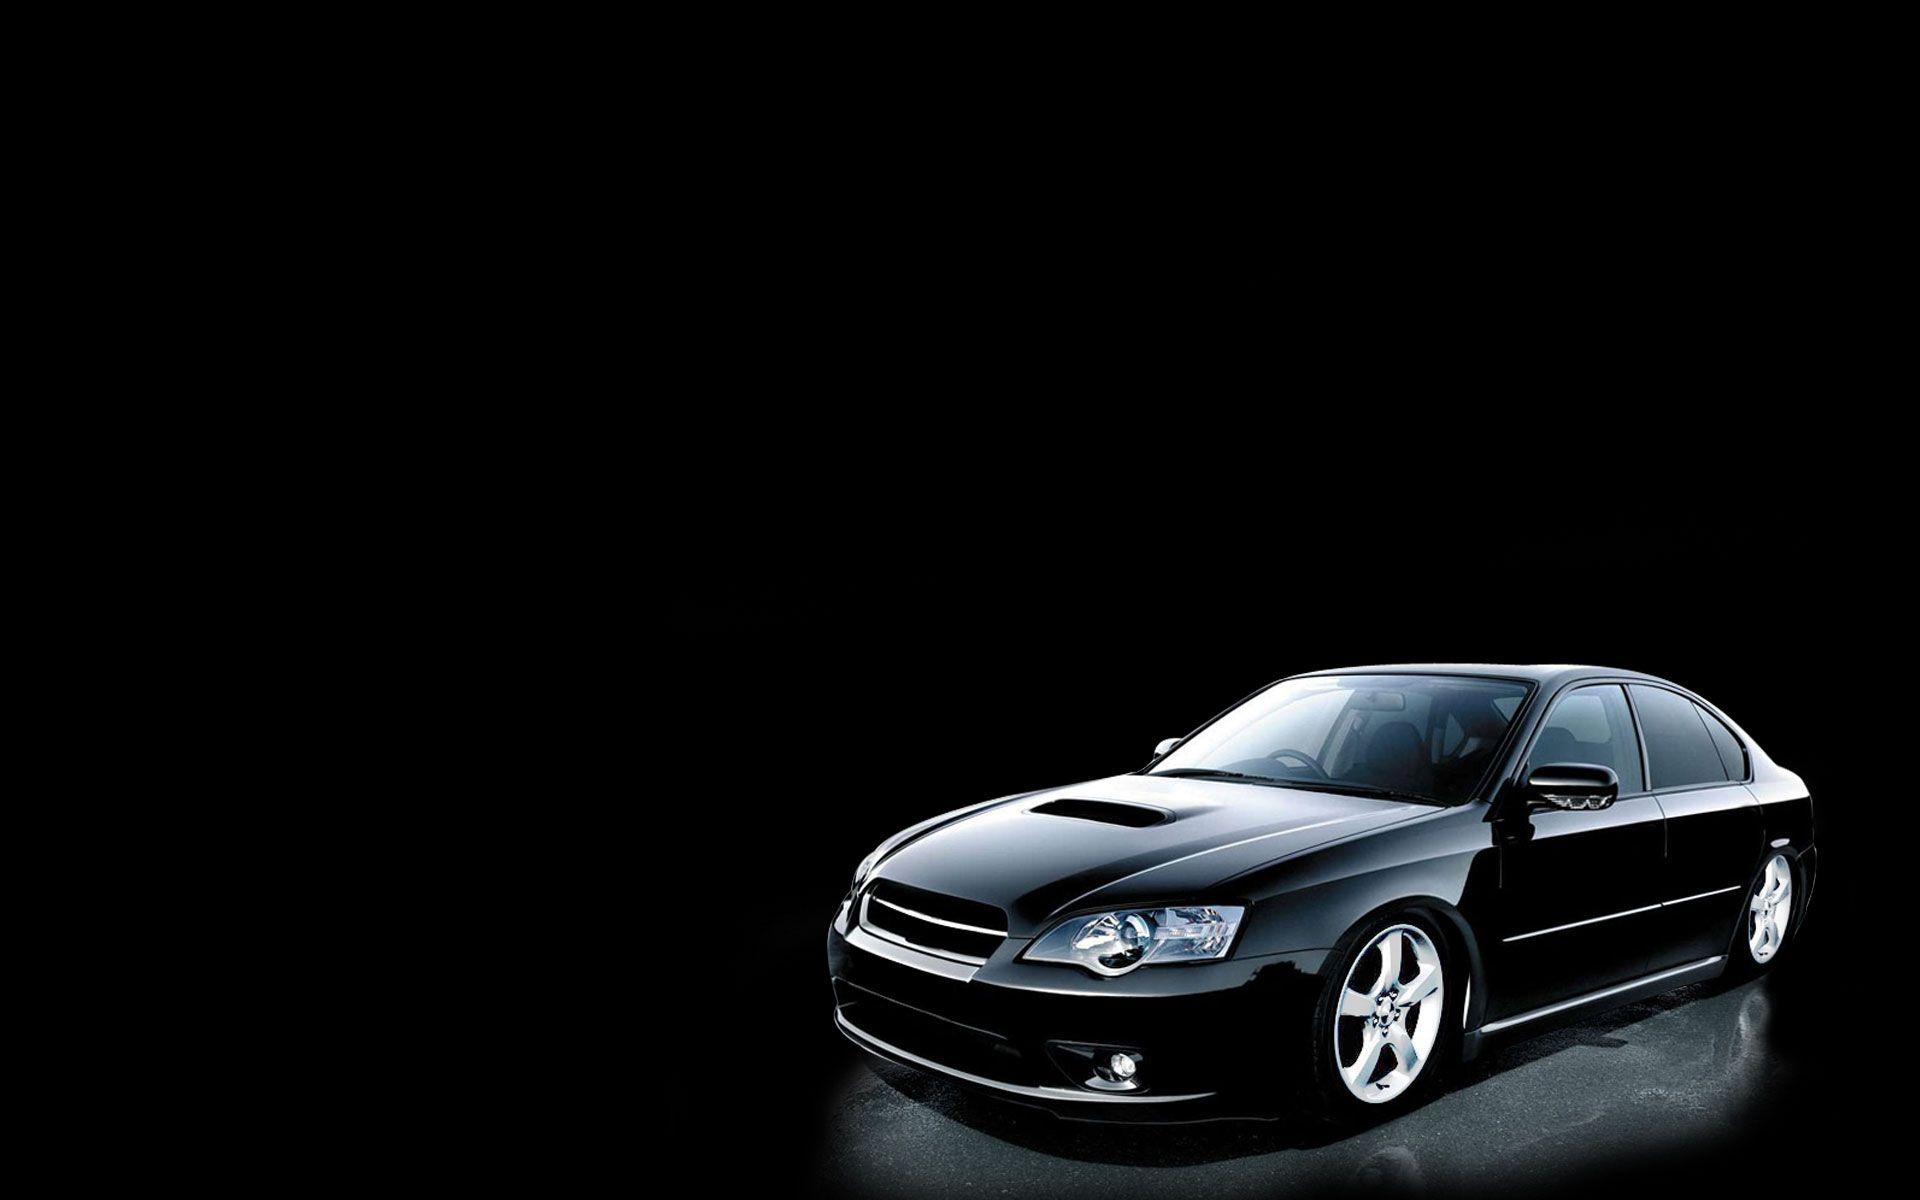 Subaru Legacy HD Wallpaper and Background Image